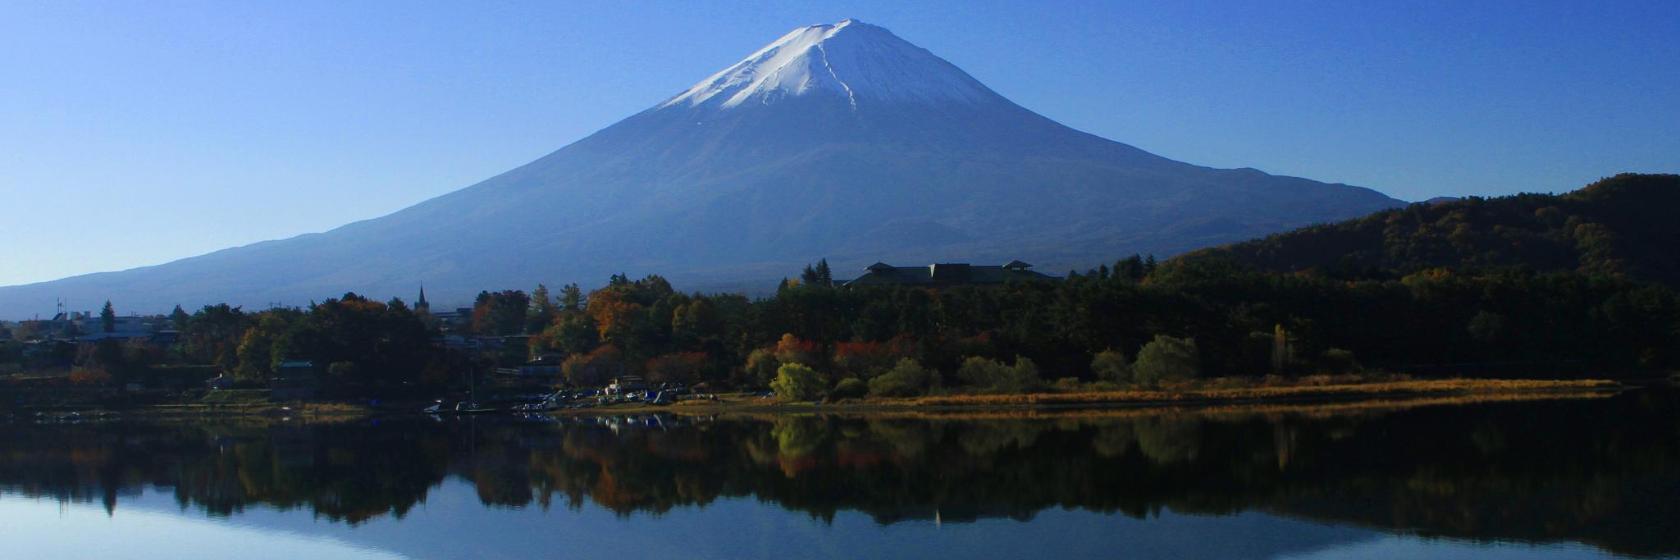 10 Hotel Terbaik Gunung Fuji Tempat Menginap Di Gunung Fuji